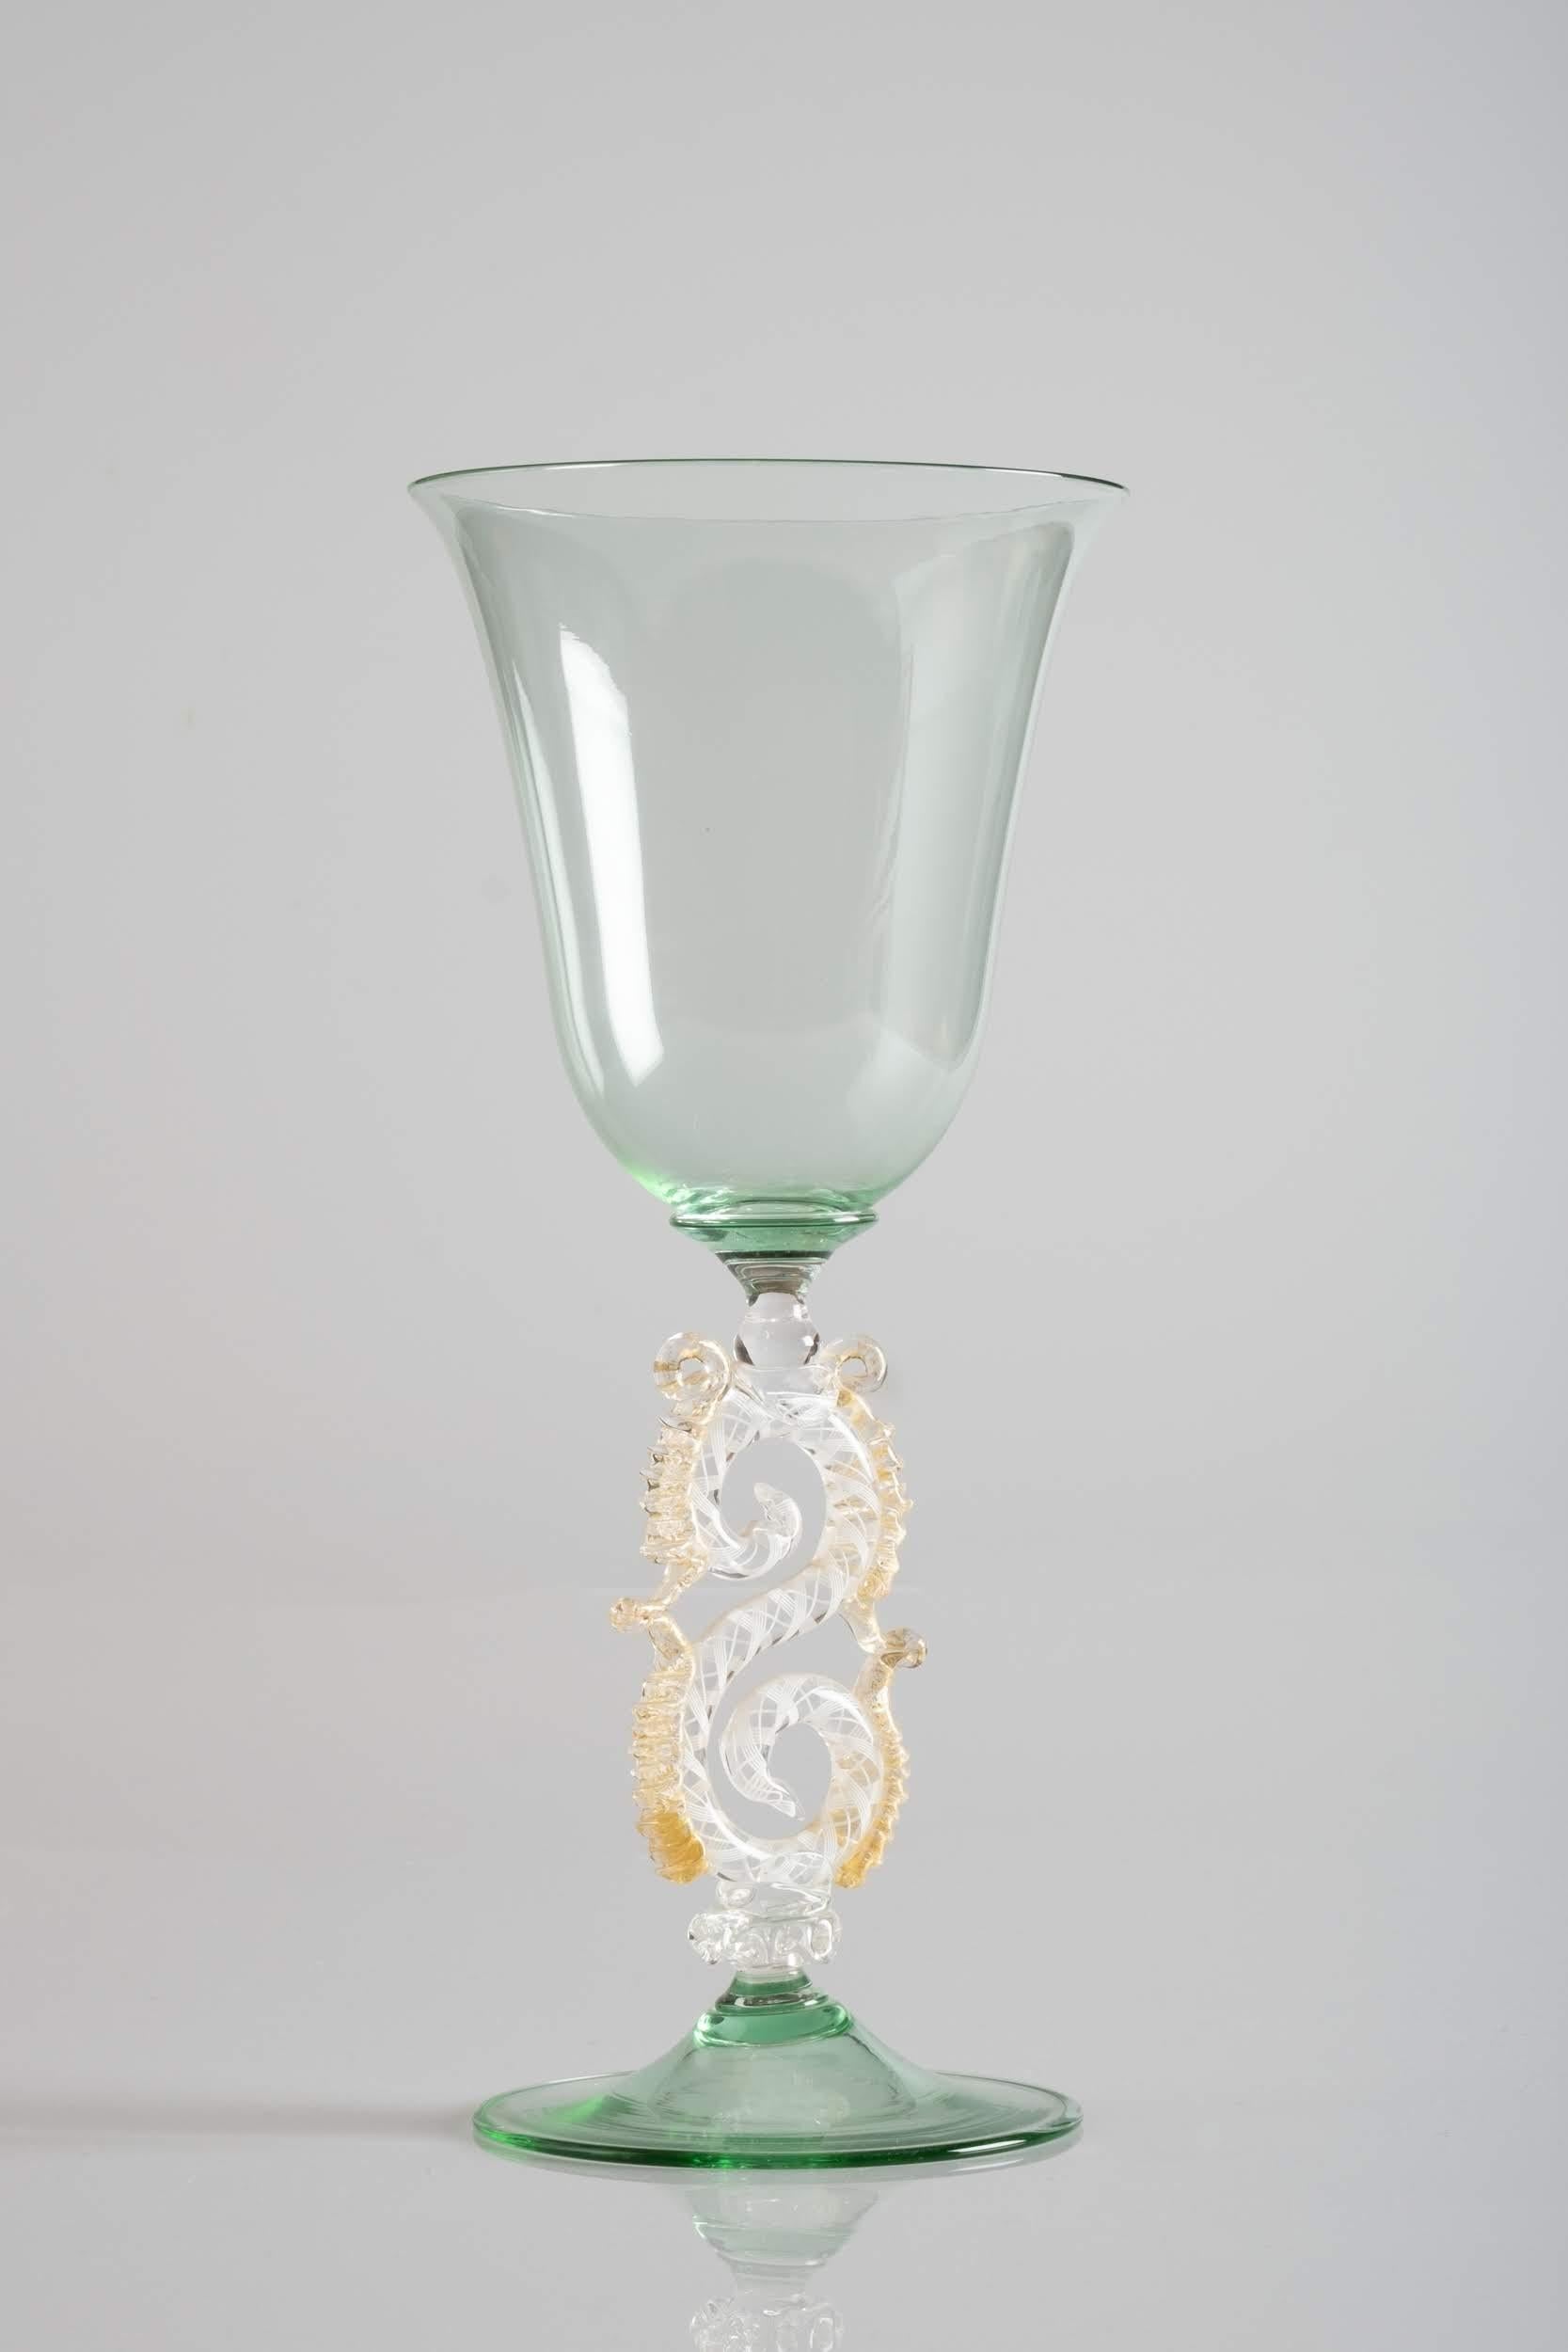 Murano Seahorse Decorated Reticulo Filigrana Wine Glass, Italy, circa 1970 In Good Condition For Sale In New York, NY